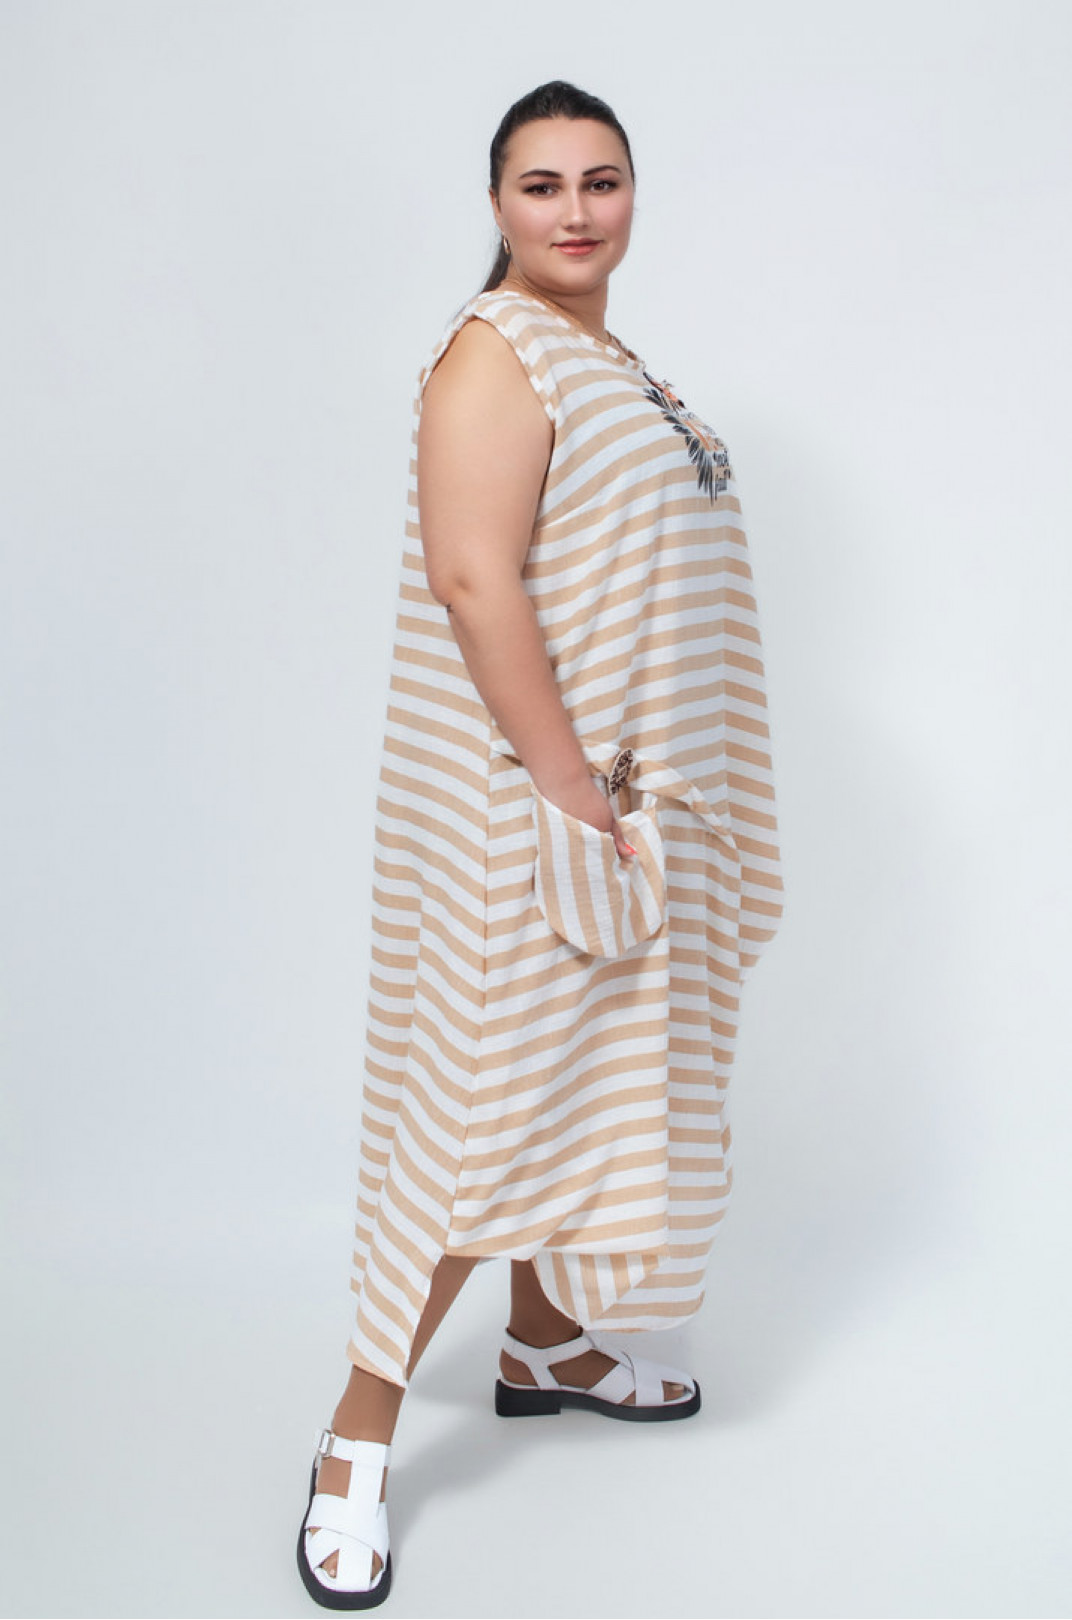 Сарафан-сукня в горизонтальну смужку з прикрасами батал